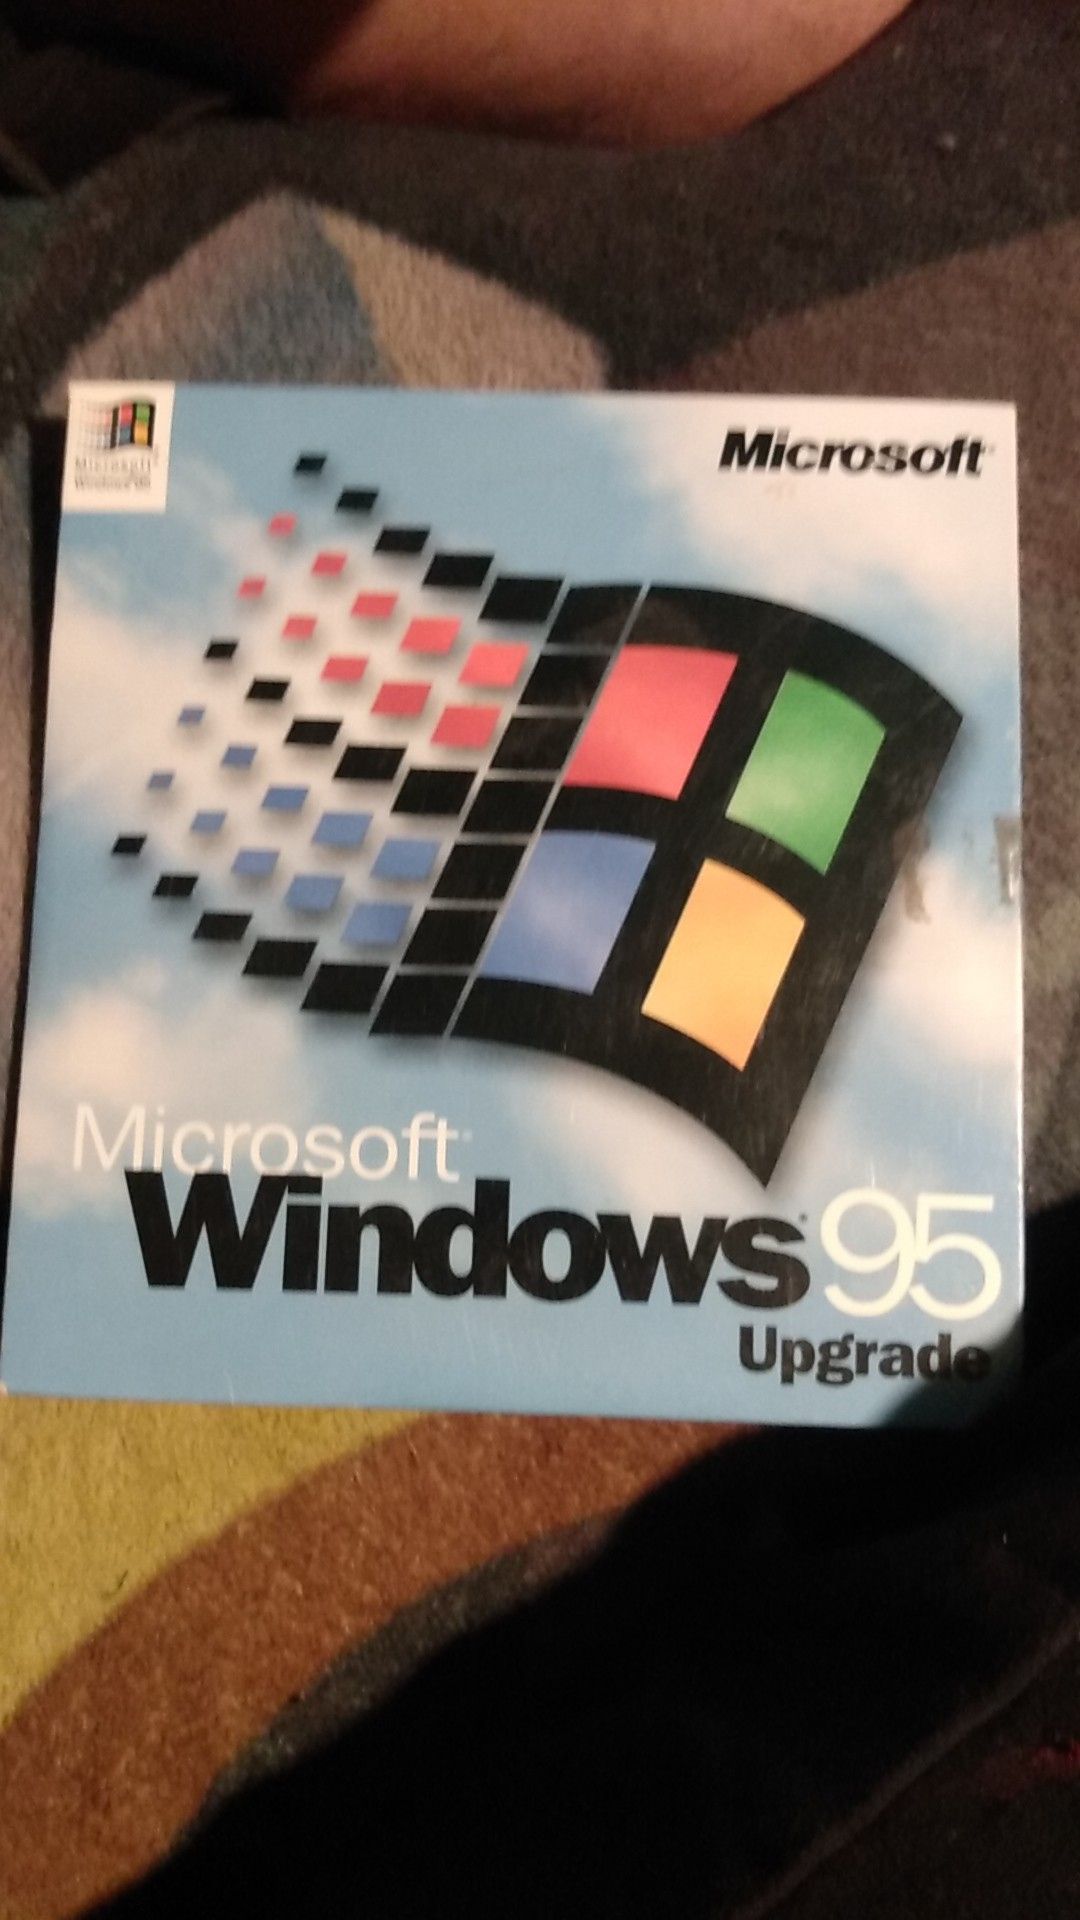 Microsoft Windows 95 upgrade